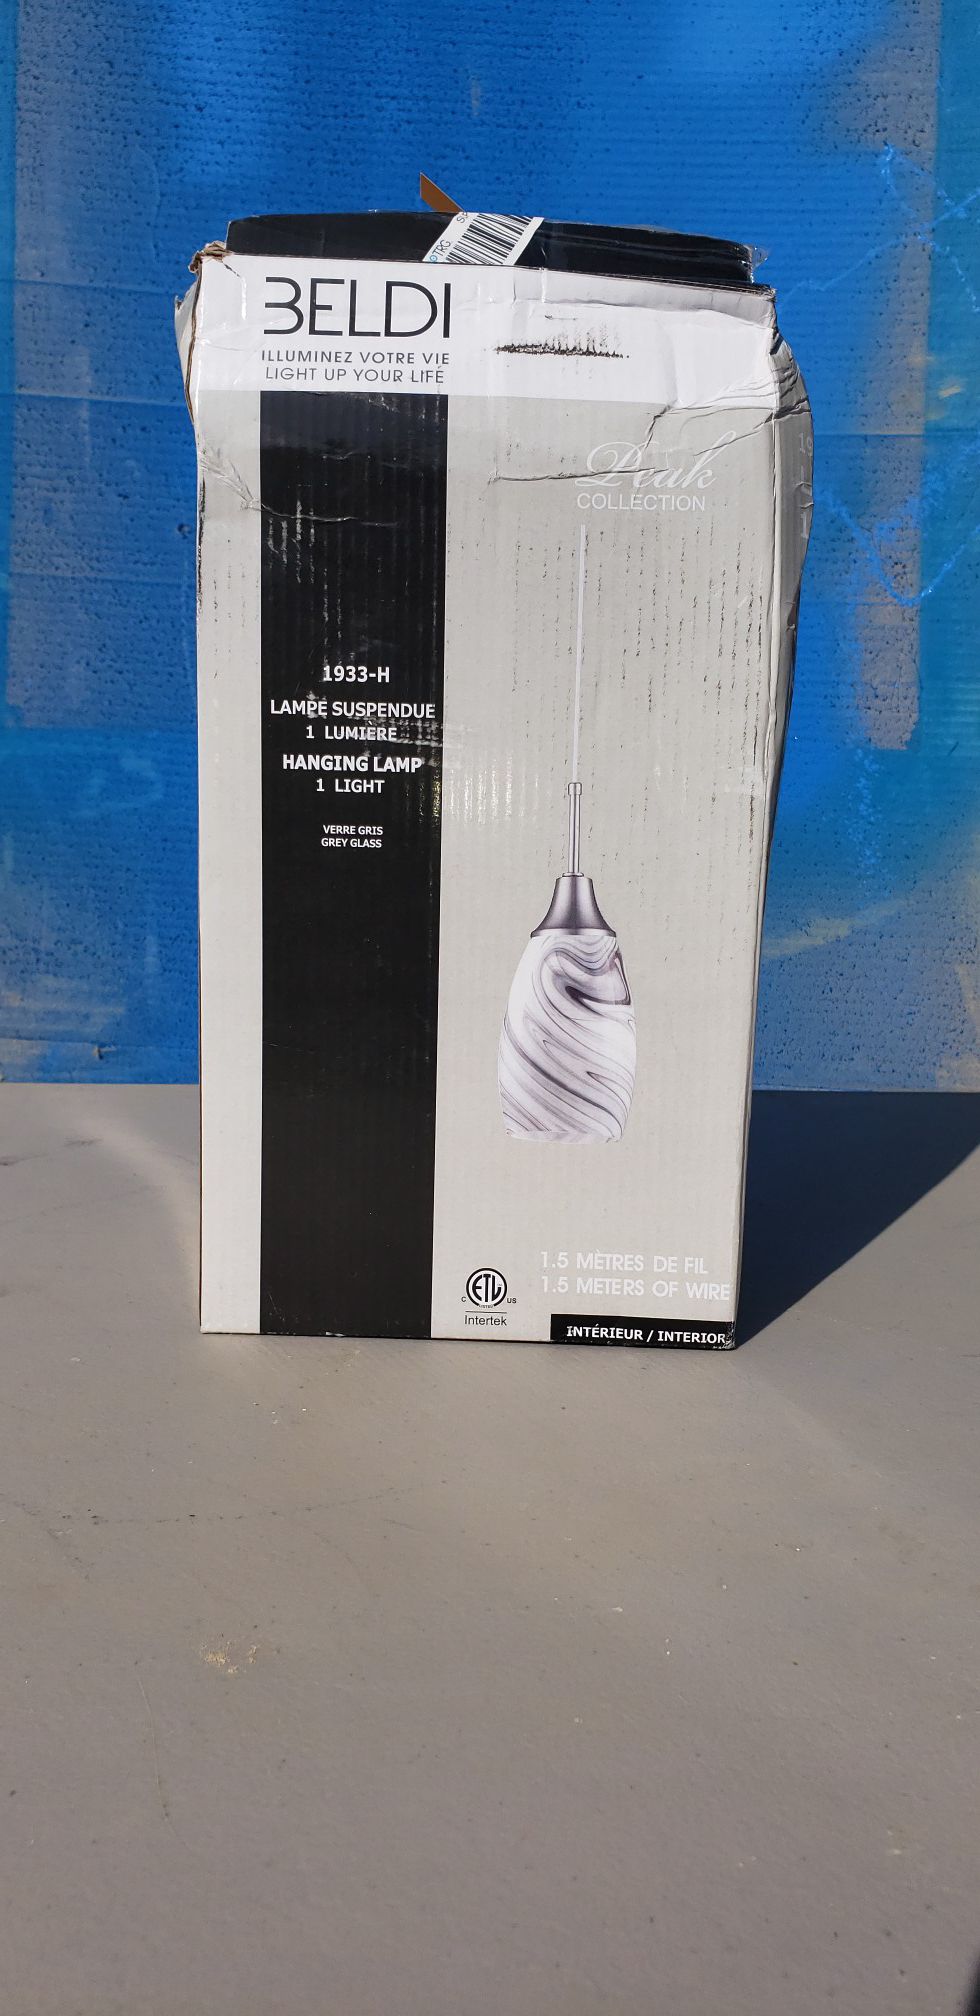 BELDI HANGING LAMP New in box